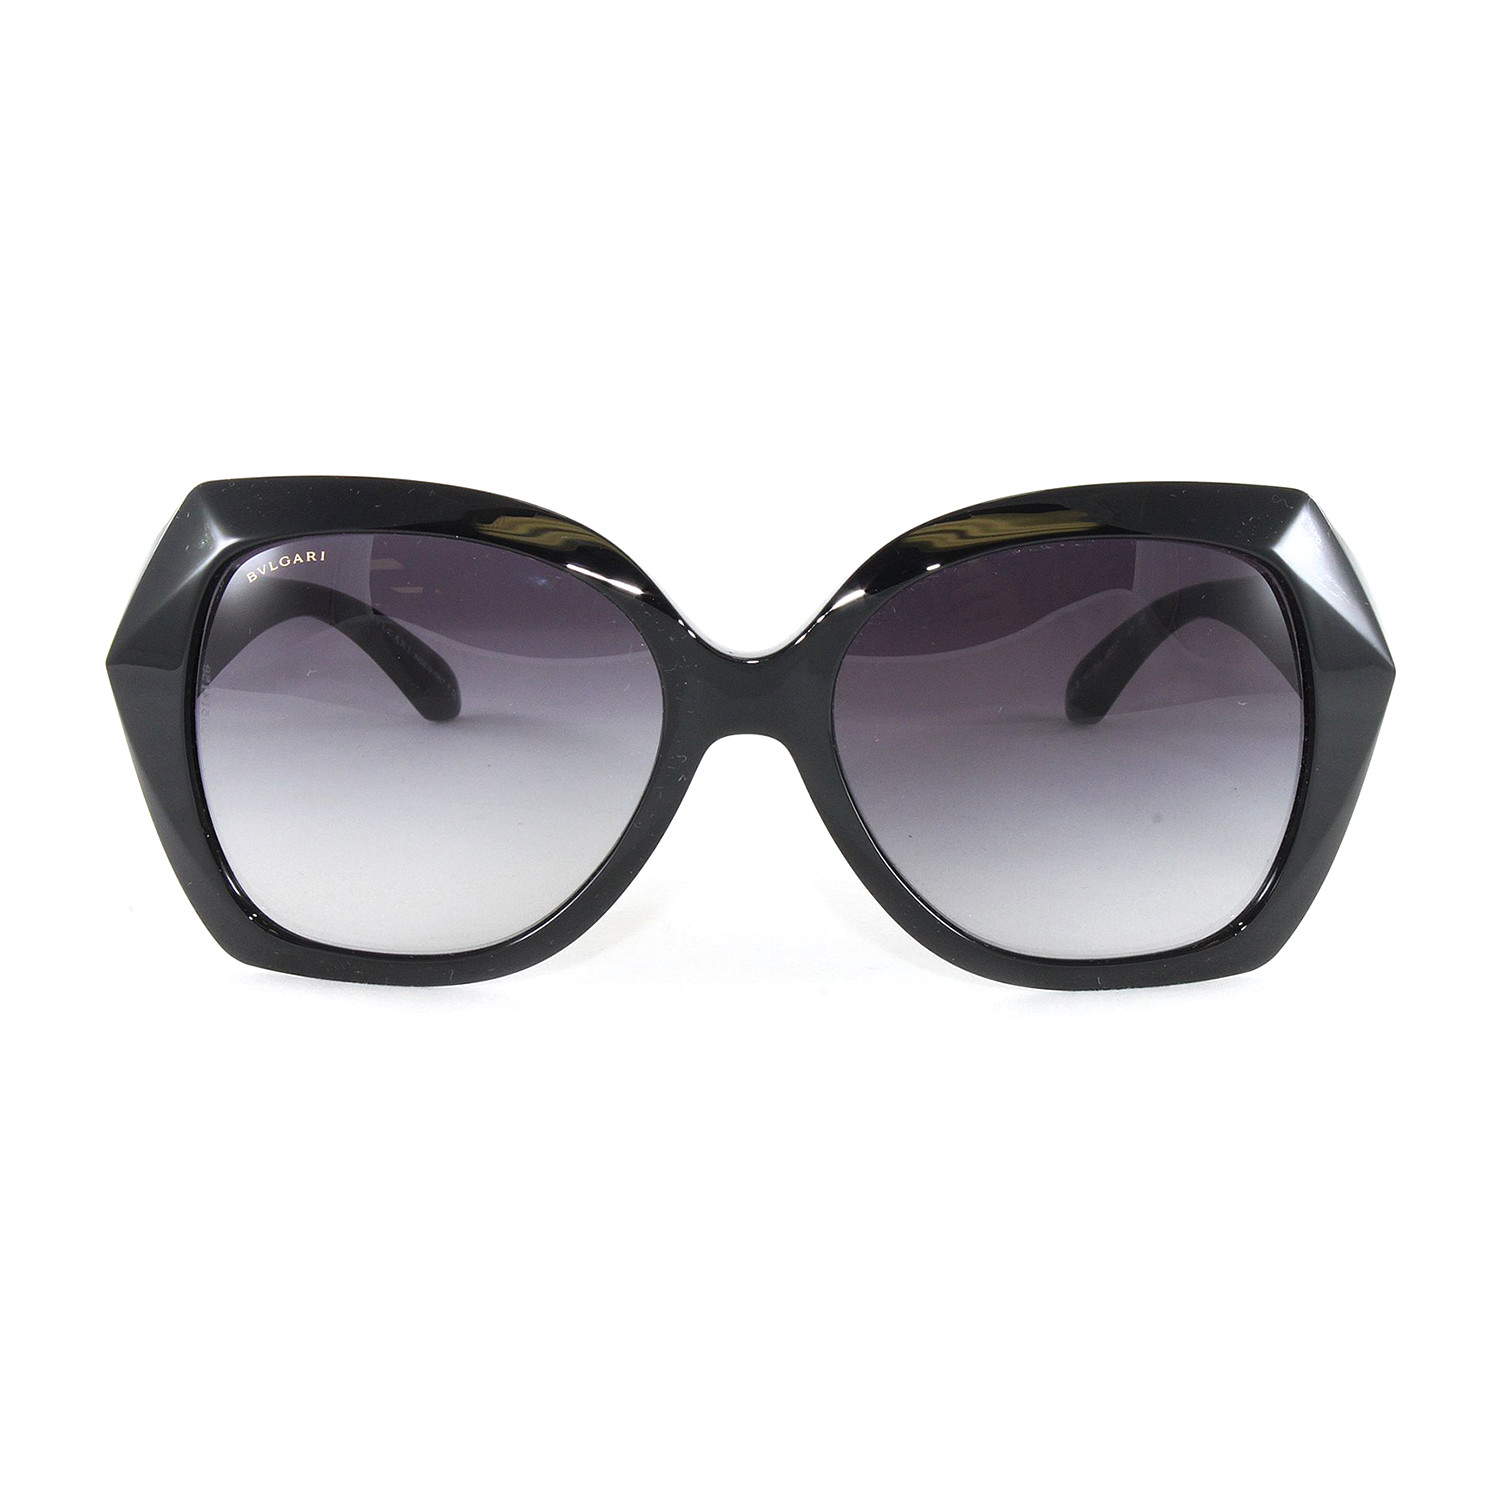 bvlgari sunglasses 2012 collection